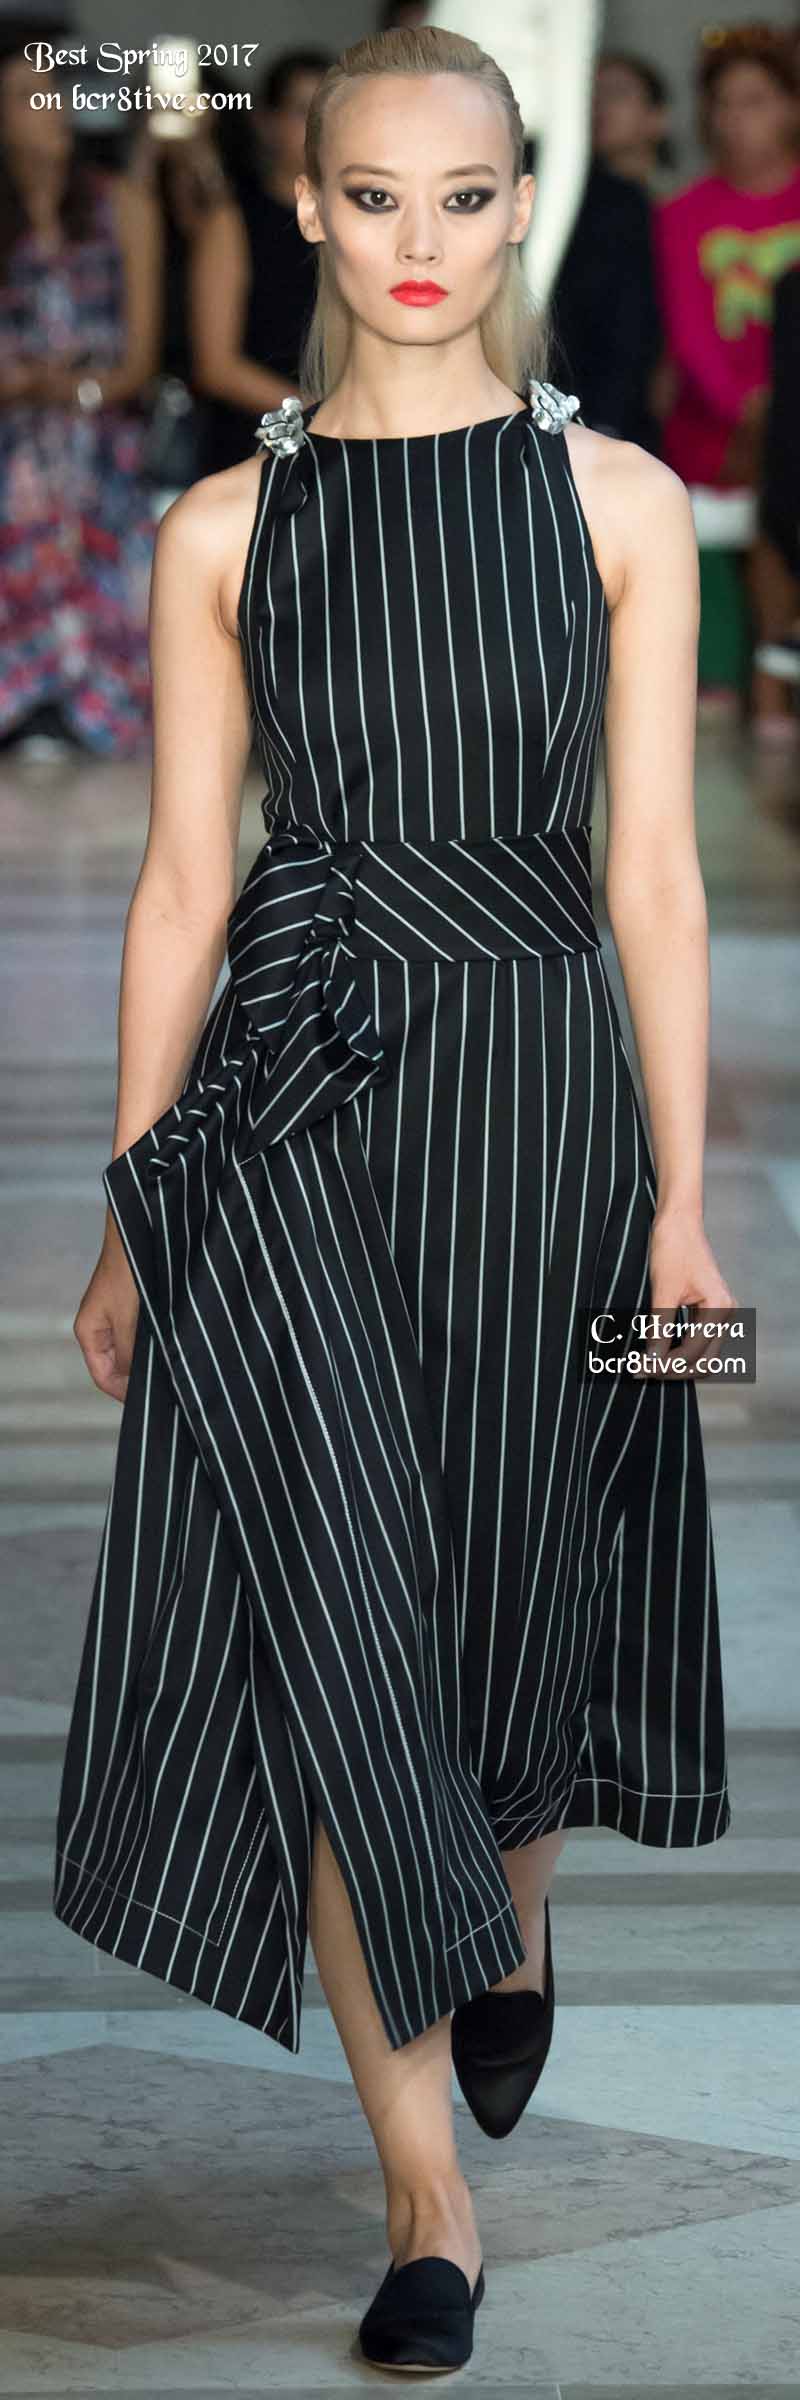 Carolina Herrera - The Best Looks from New York Fashion Week Spring 2017